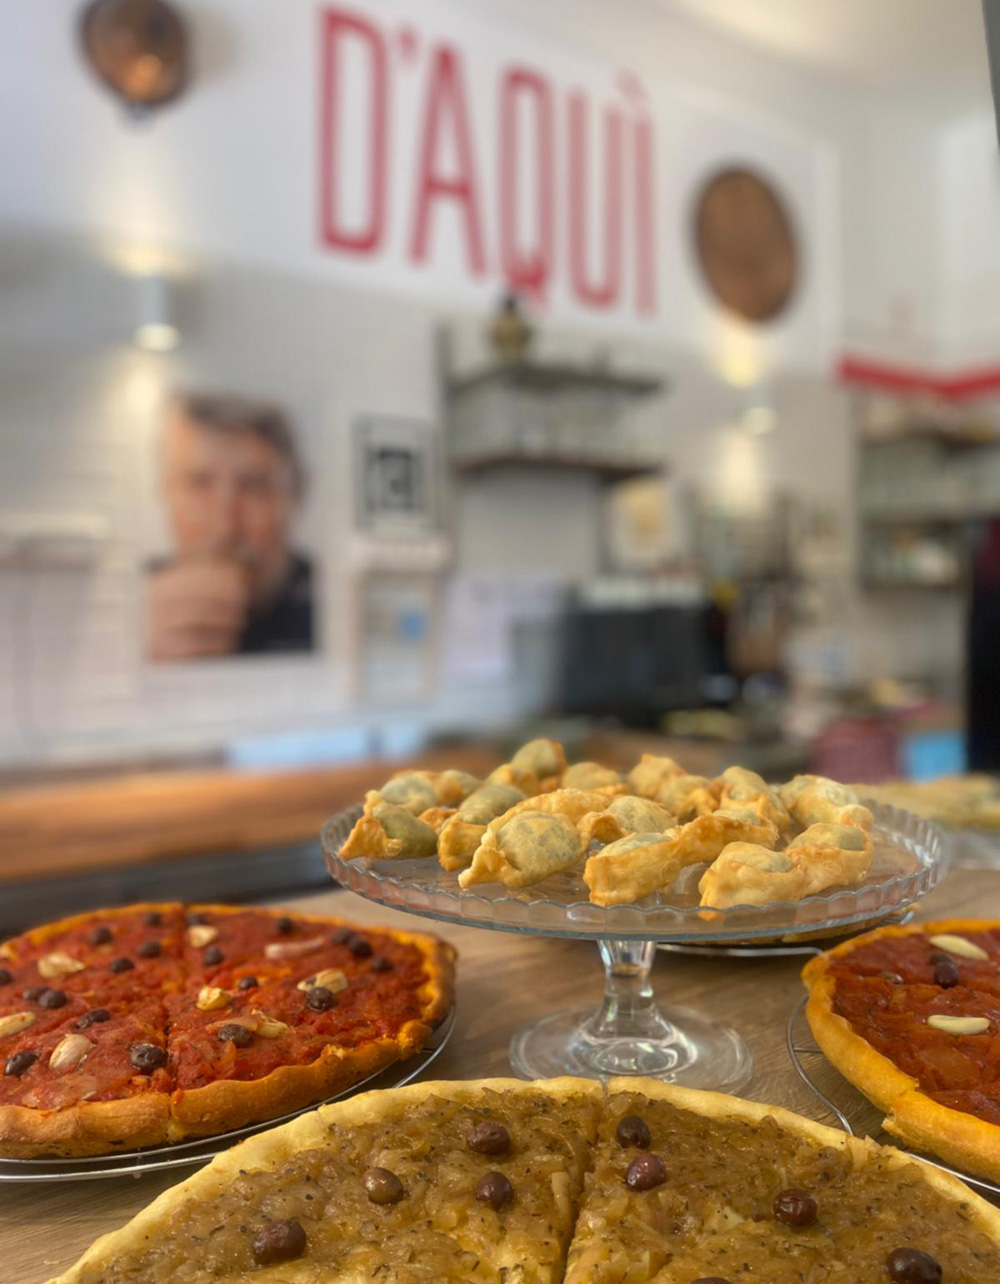 Barbajuans, pizza, and pizzaladière from the D'AQUÌ restaurant